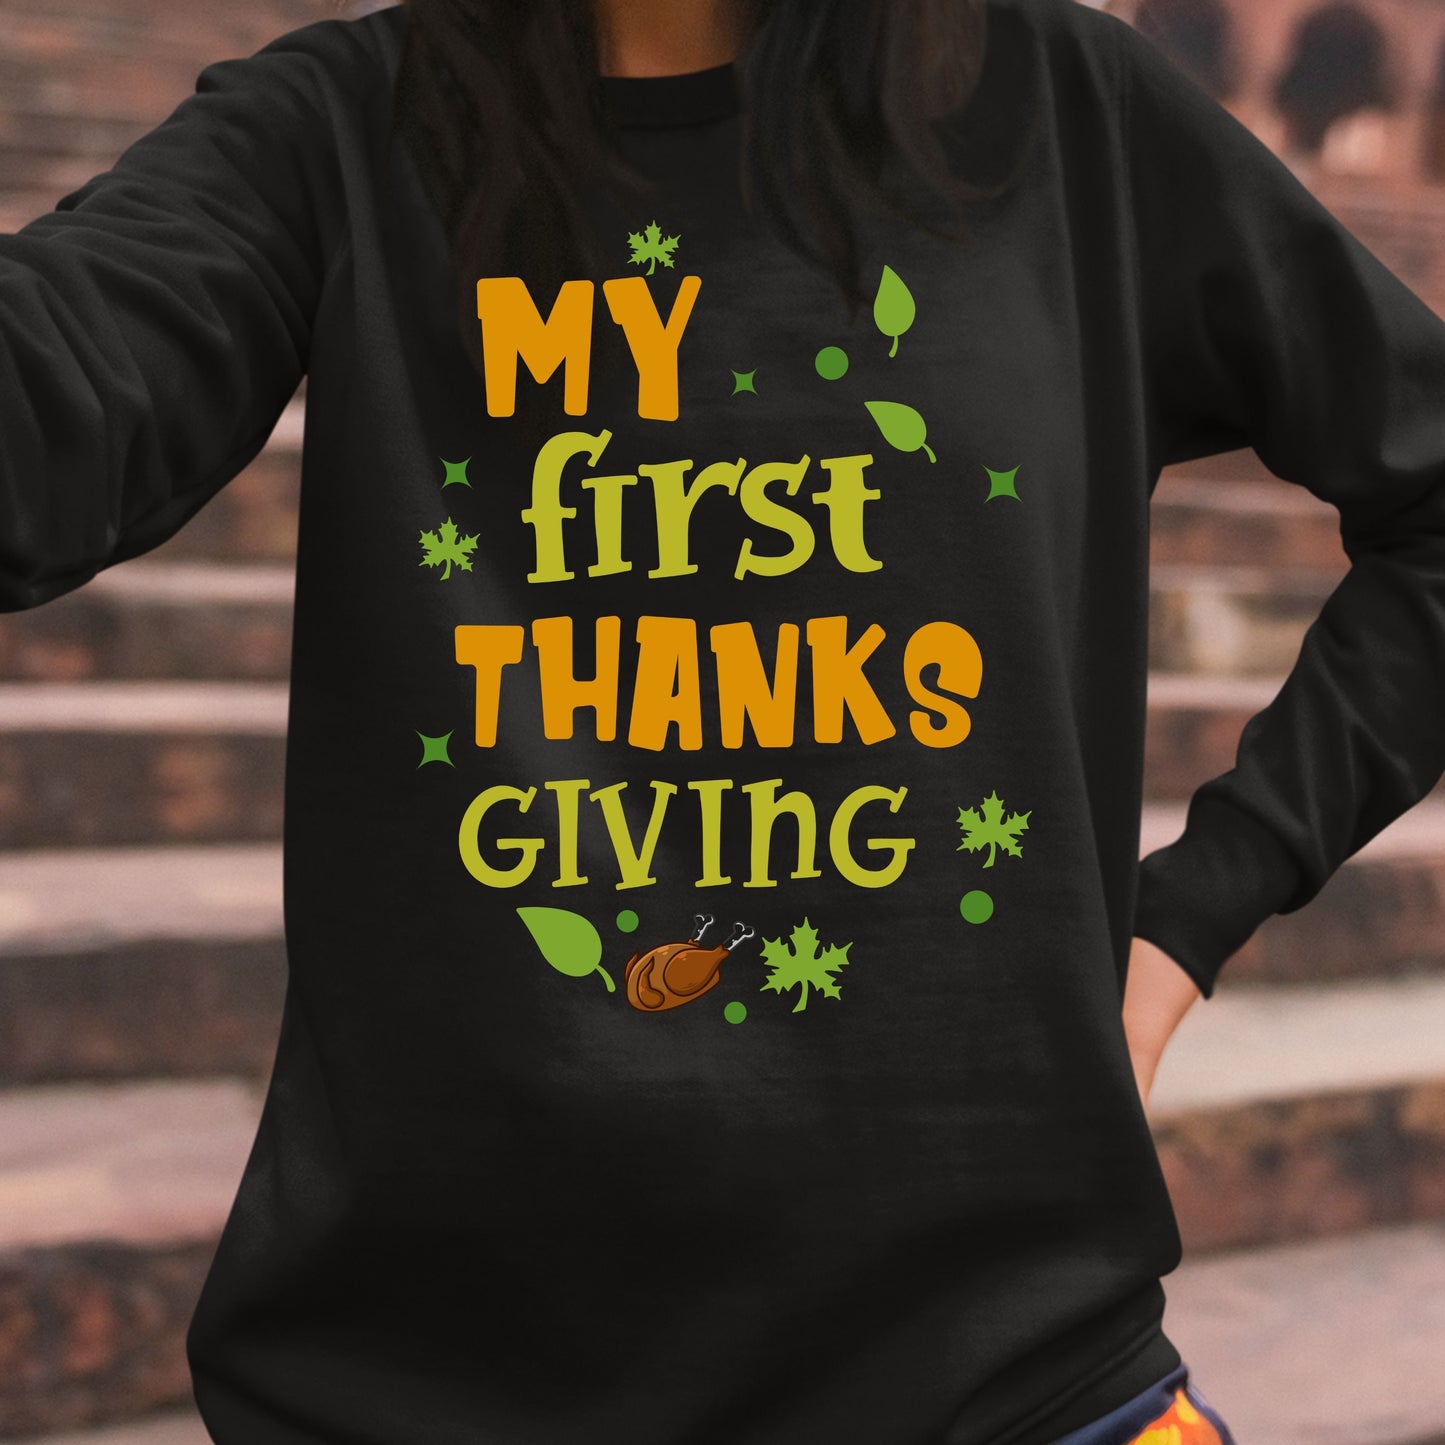 First Thanks Giving Sweatshirt, Thanksgiving Sweatshirt, Thanksgiving Sweater for Kids, Cute Thanksgiving Sweatshirt, Funny Thanksgiving